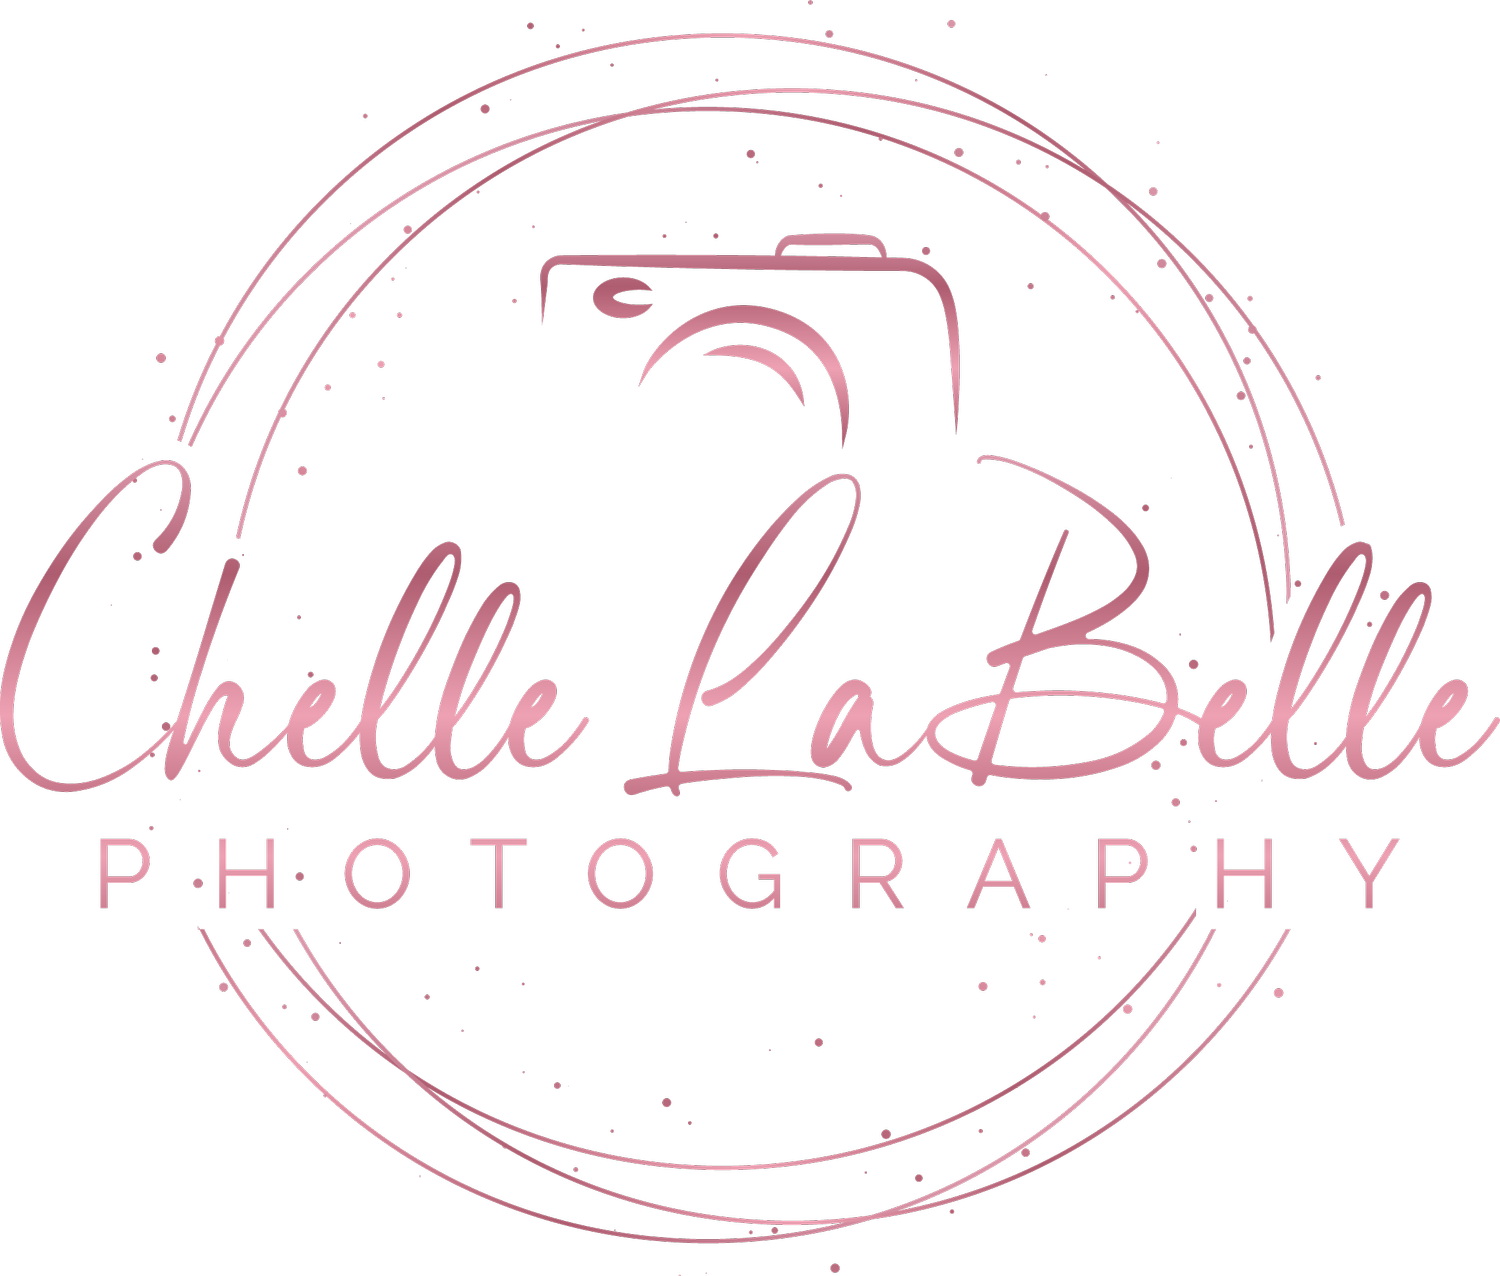 Chelle LaBelle Photography